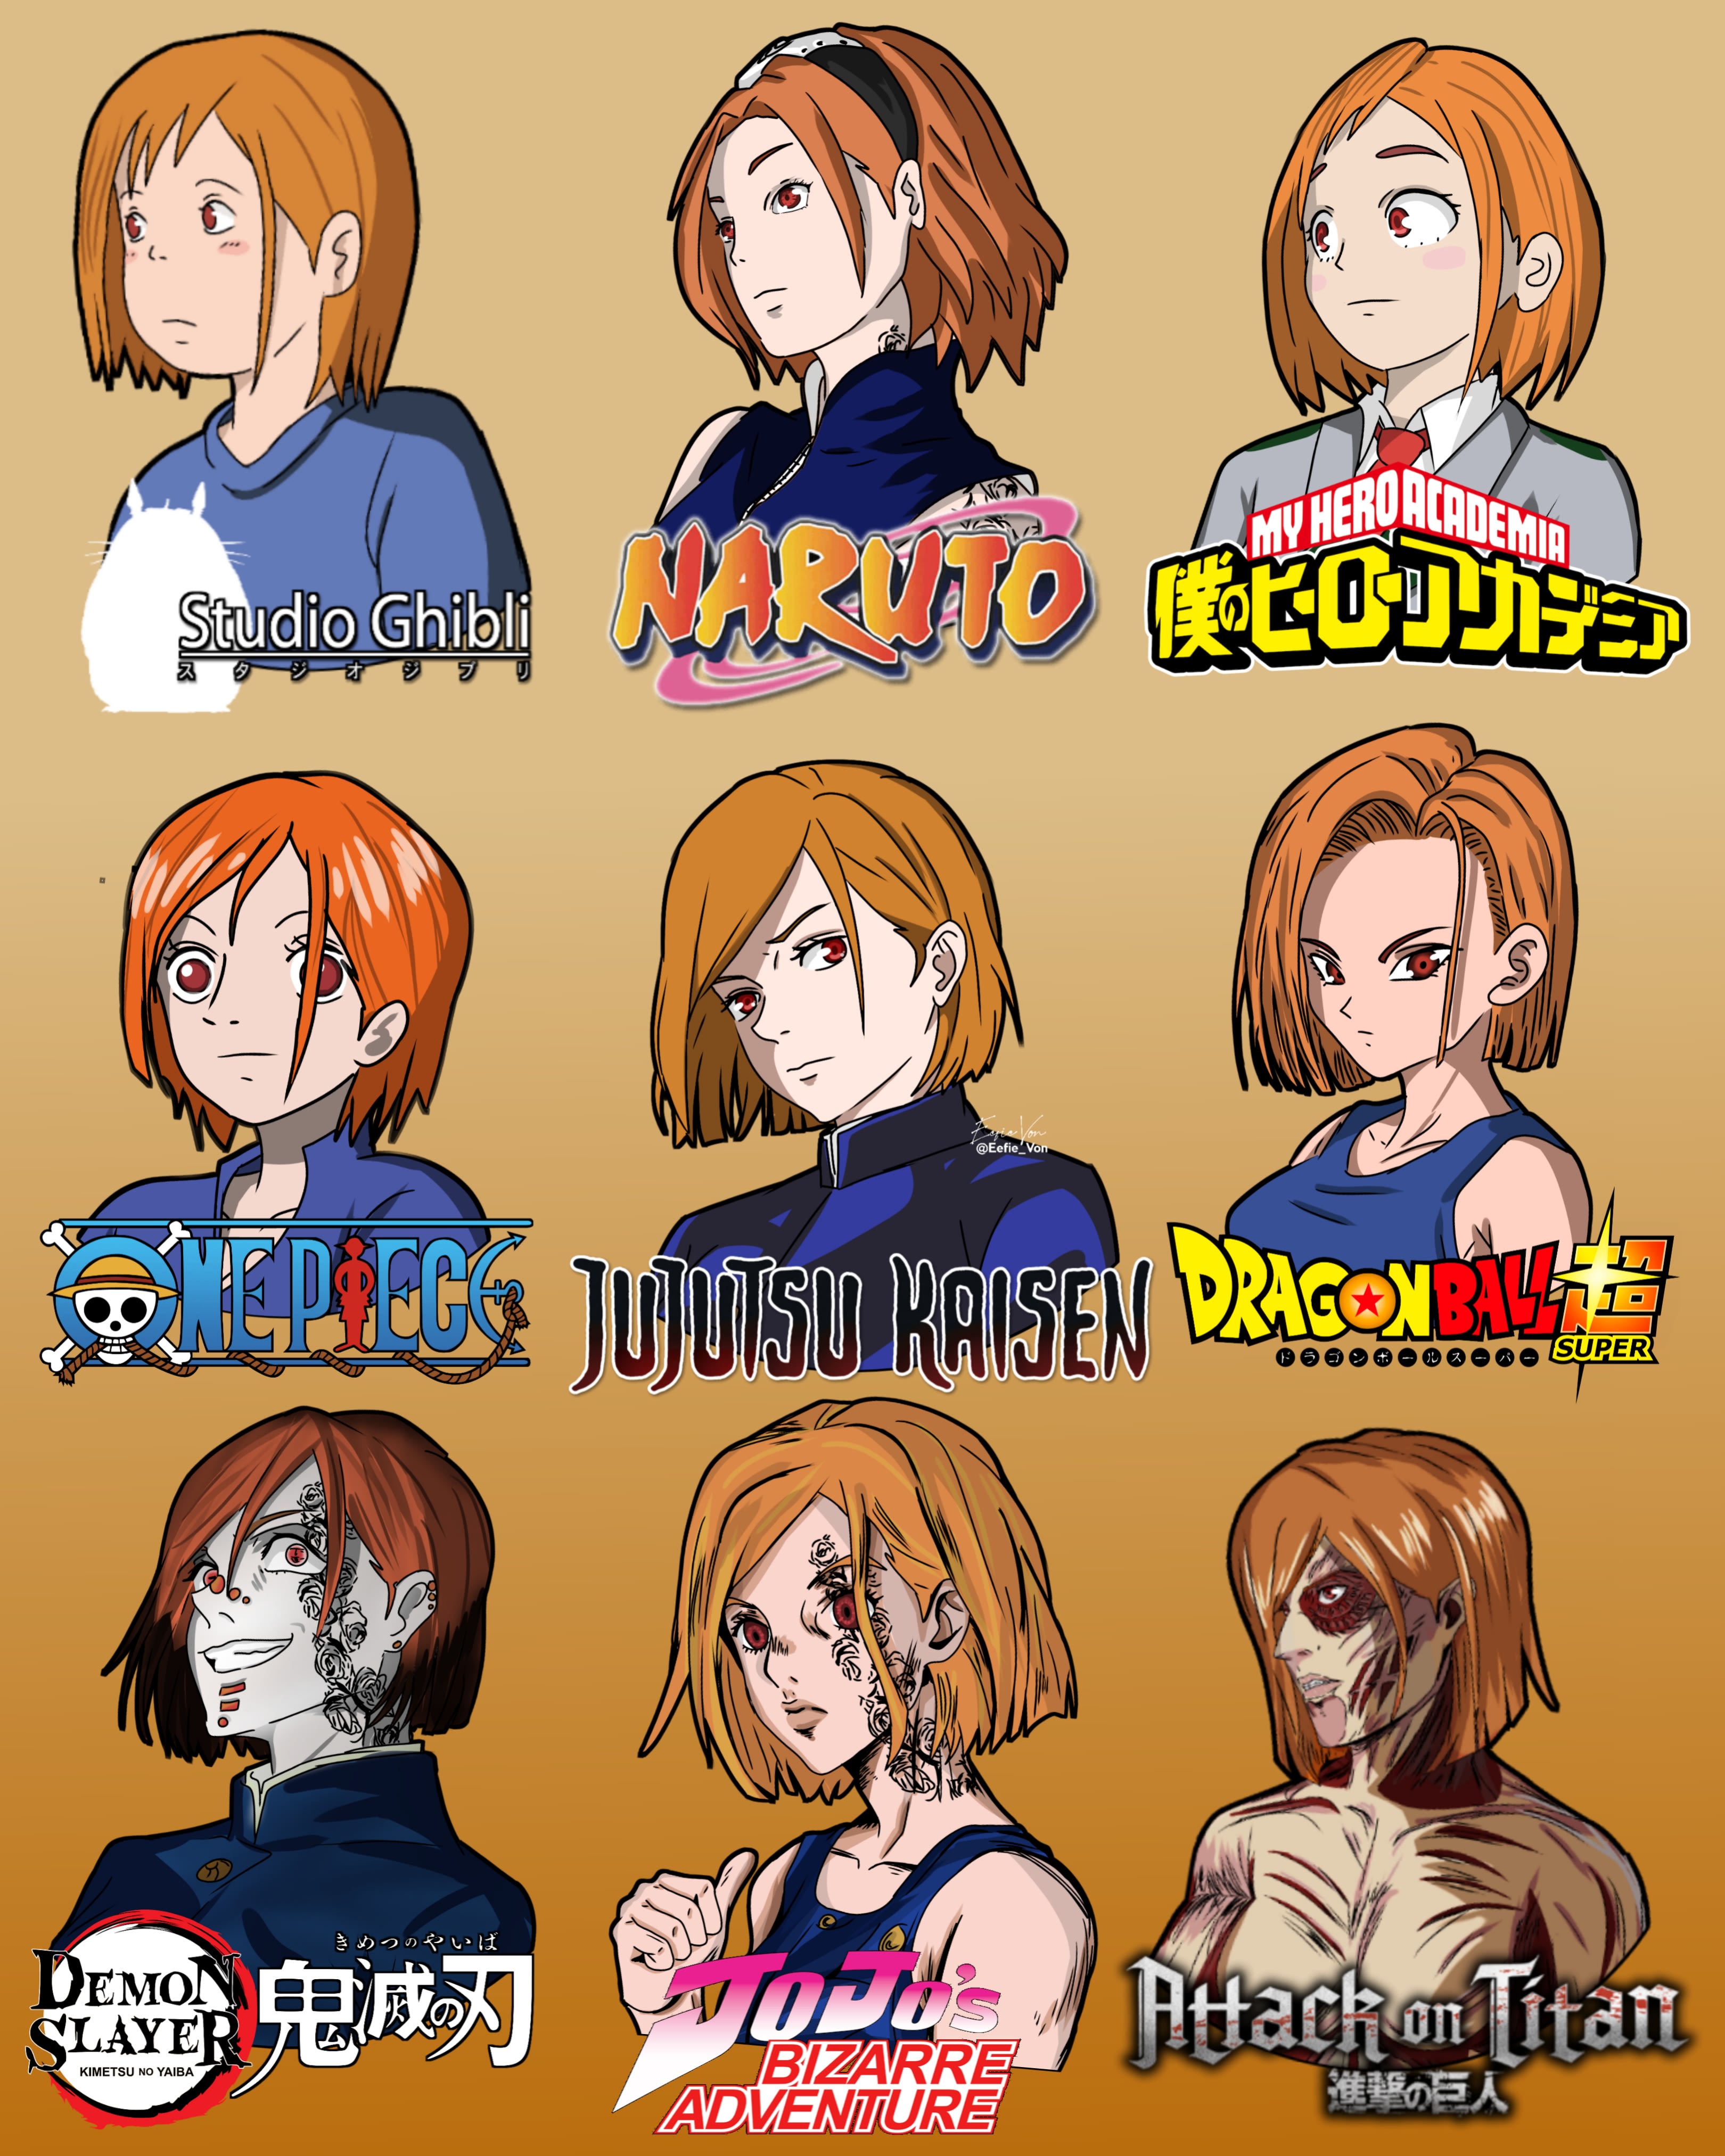 Gokusan in different anime styles by TheUnknownAvatar on DeviantArt